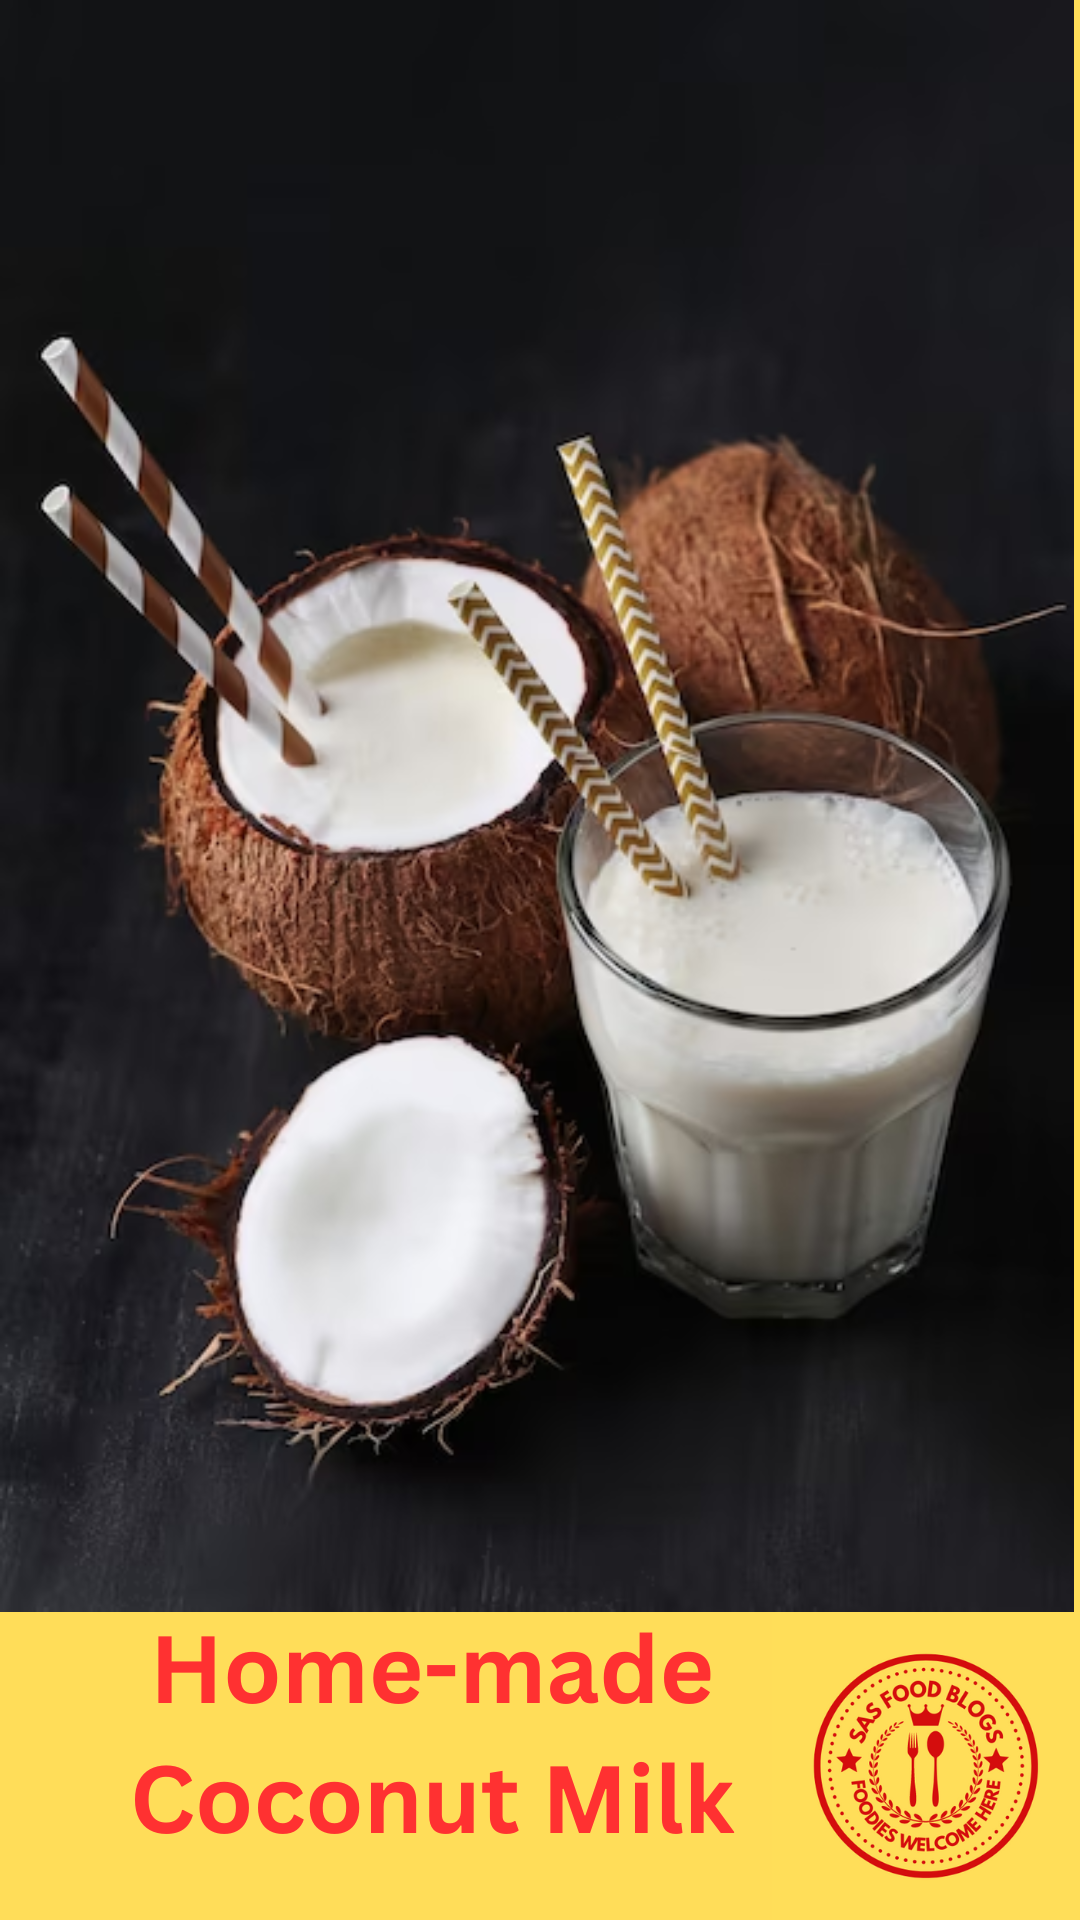 Home-made Coconut Milk